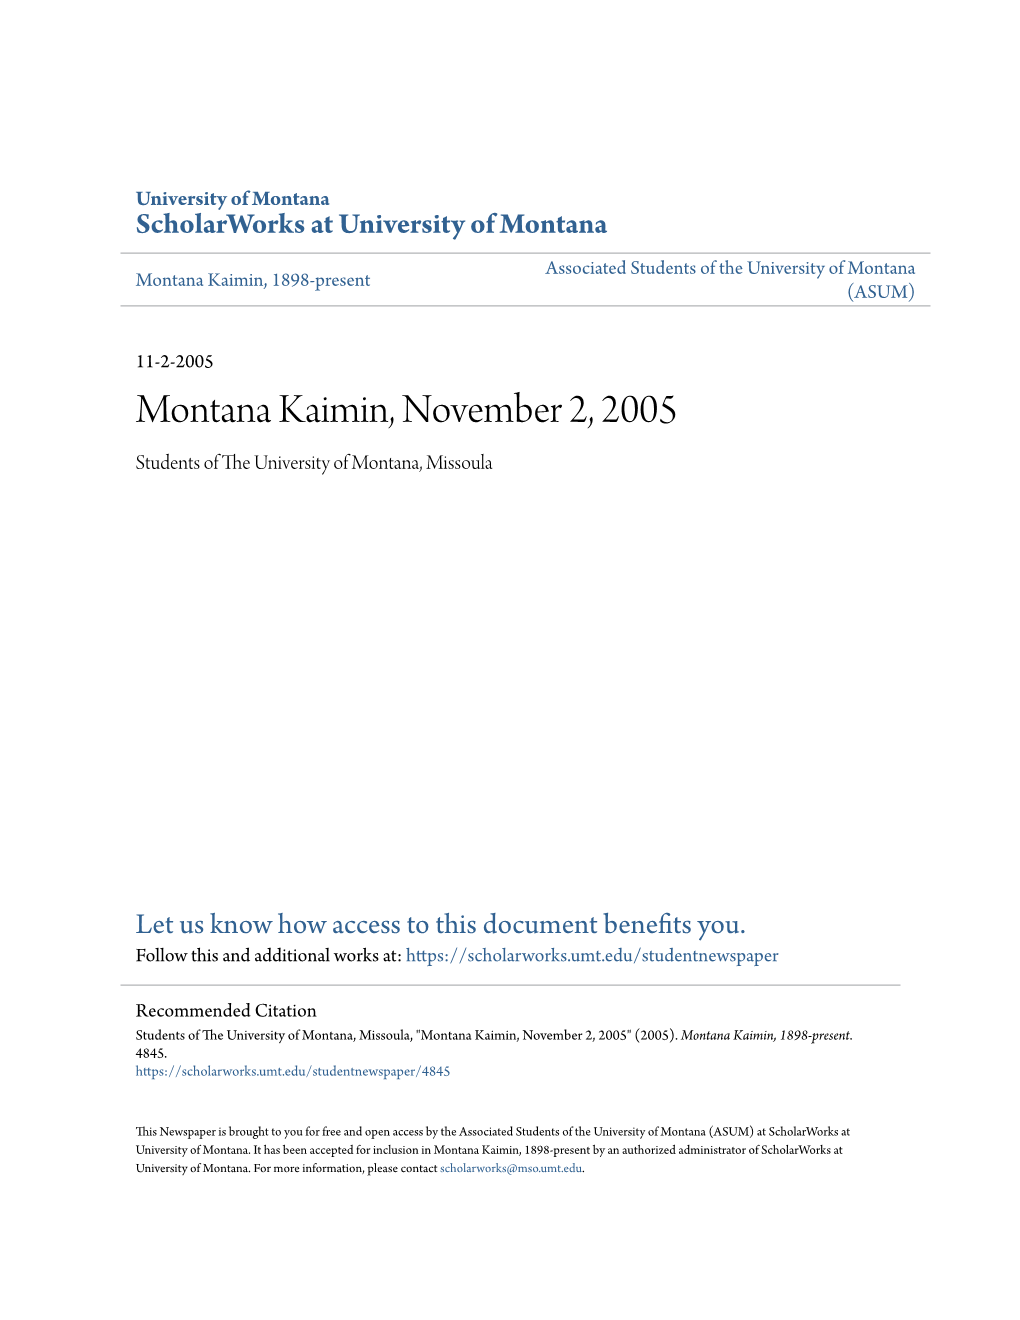 Montana Kaimin, November 2, 2005 Students of the Niu Versity of Montana, Missoula